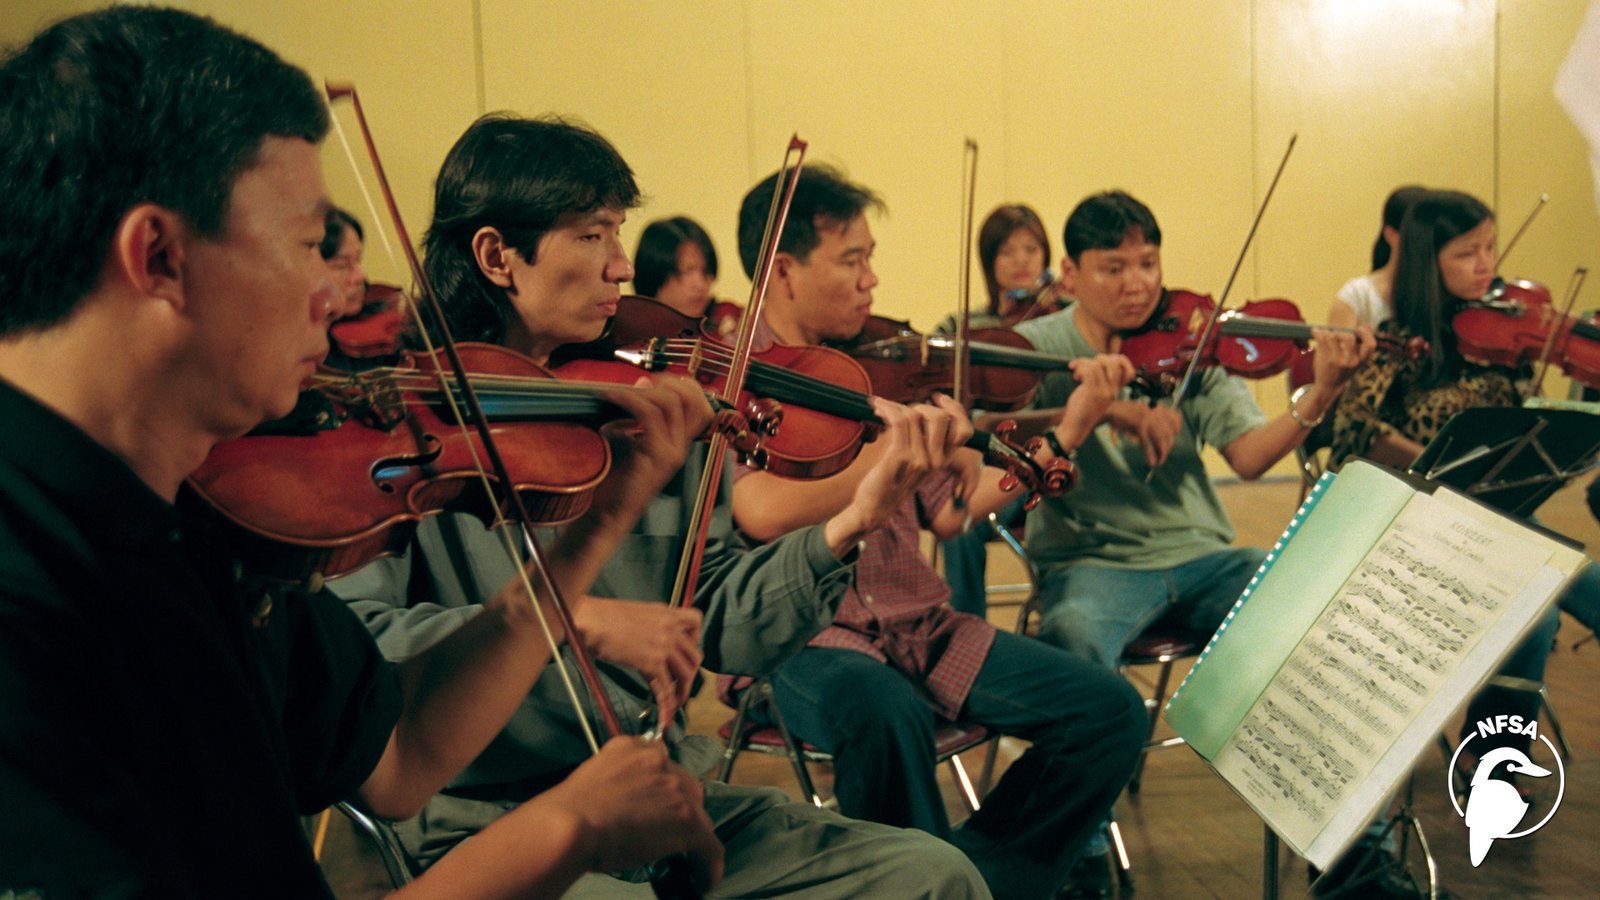 Screenshot of musicians from the film Vietnam Symphony